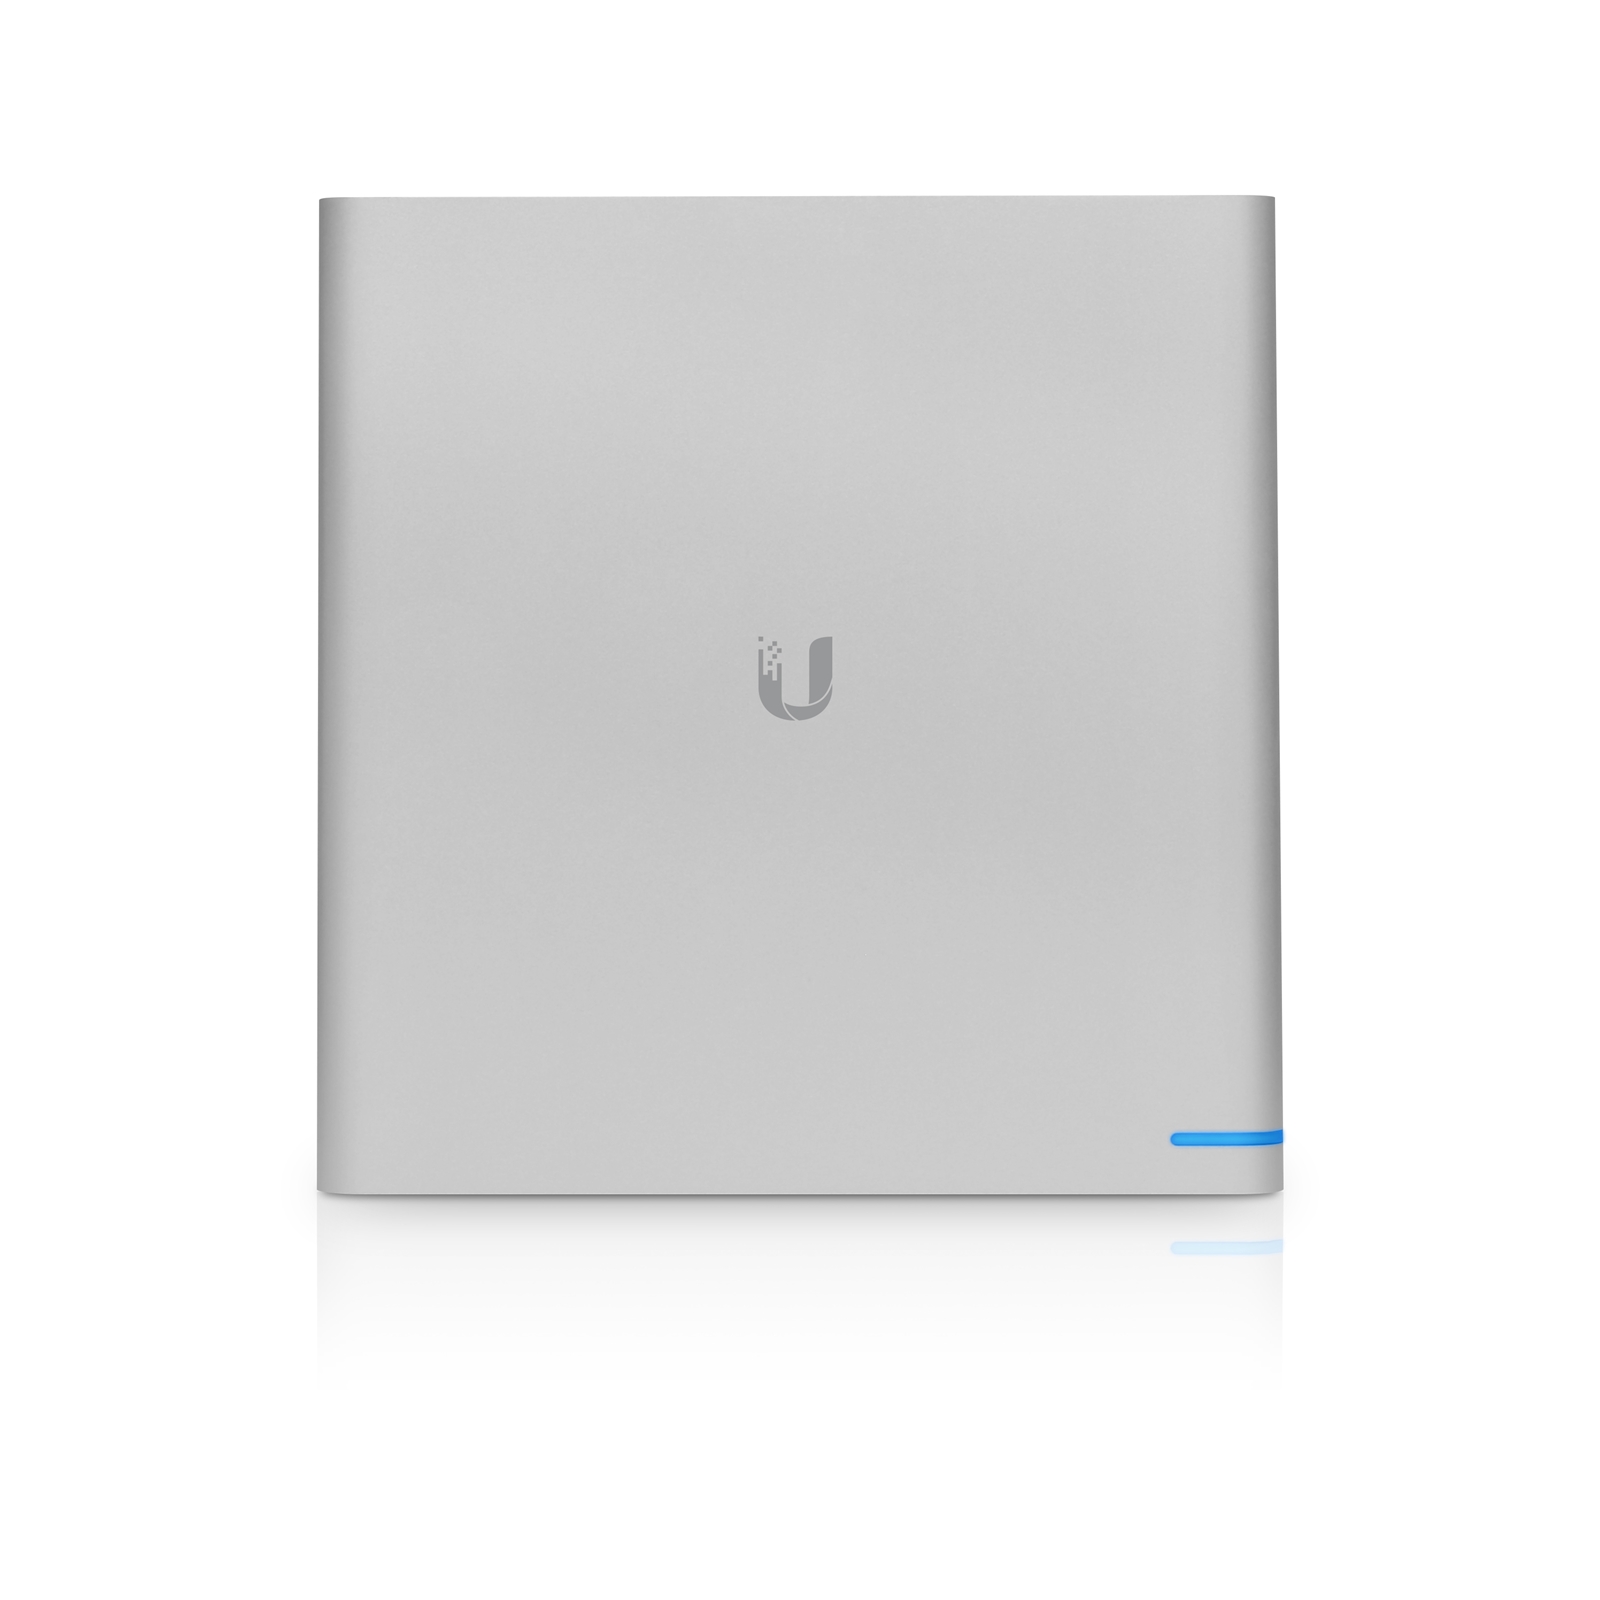 Ubiquiti UCK-G2-PLUS UniFi Cloud Key Gen2 Hybrid Controller with 1TB HDD